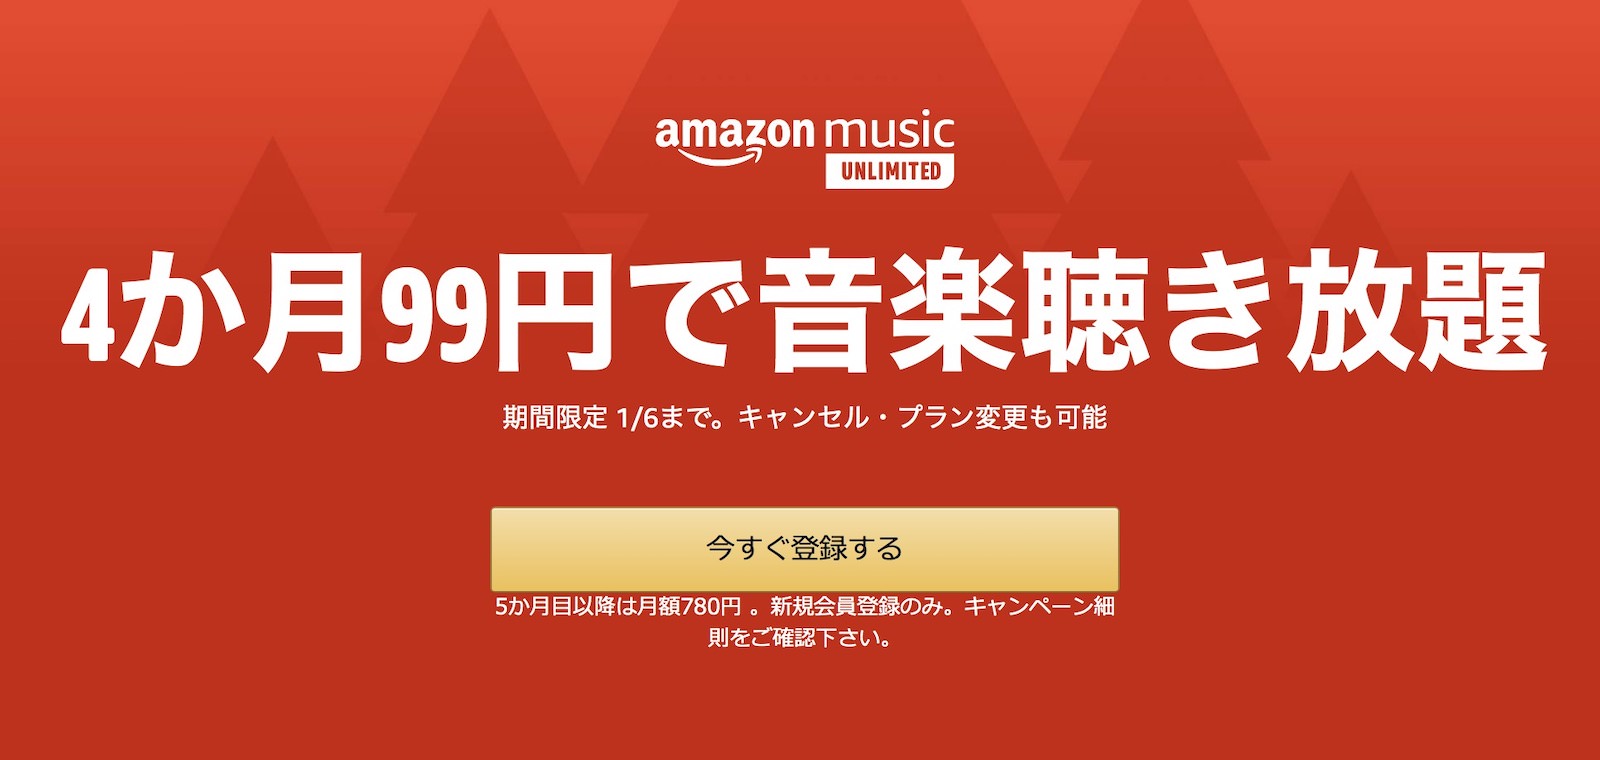 Amazon-Music-Unlimited-Campaign.jpg